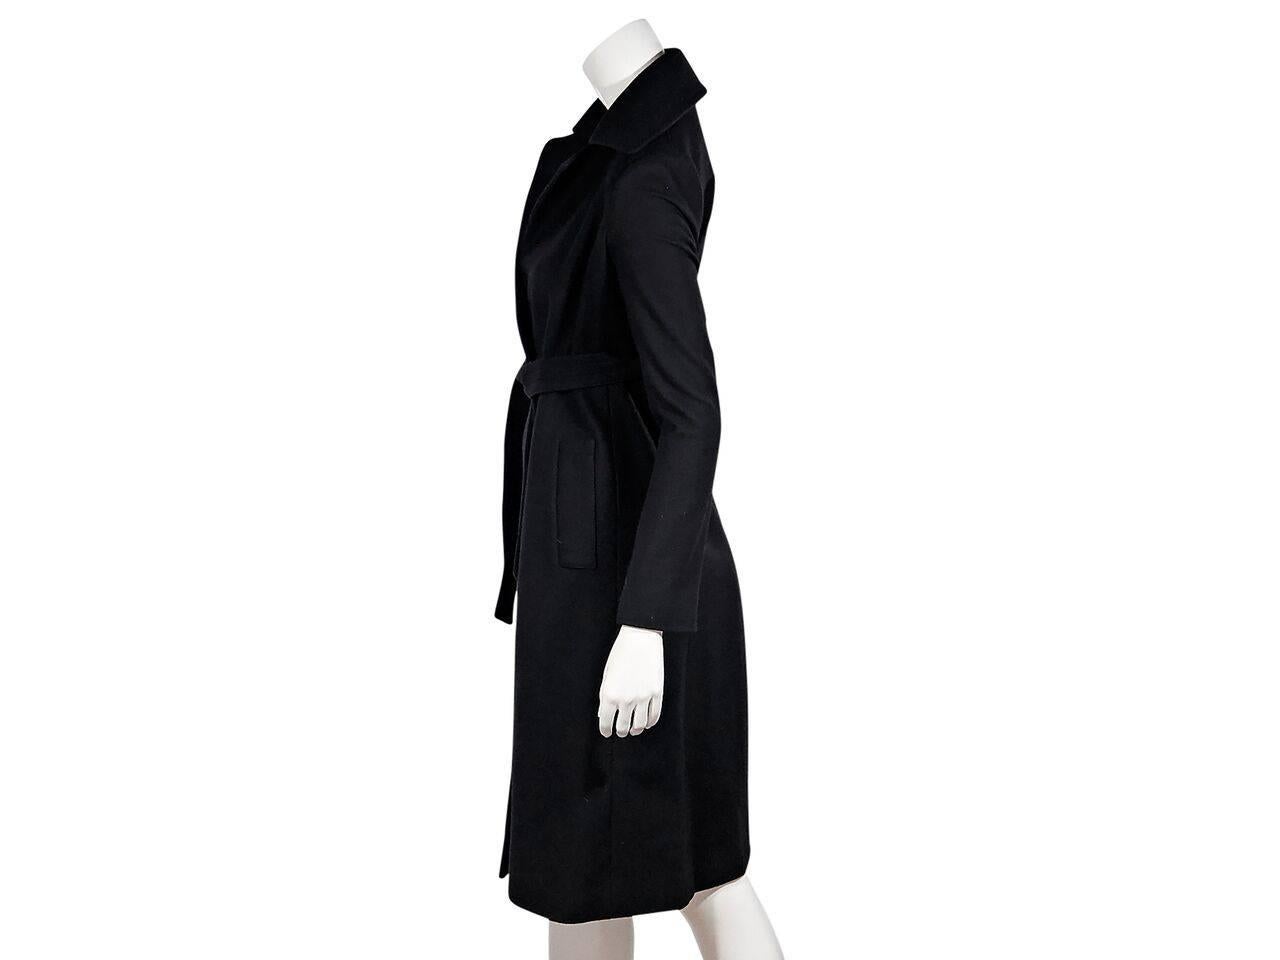 Product details:  Black wool-blend wrap coat by Diane von Furstenberg.  Notched lapel.  Long sleeves.  Tie belt waist.  Center back hem vent. 
Condition: Pre-owned. Very good.
Est. Retail $ 1,275.00